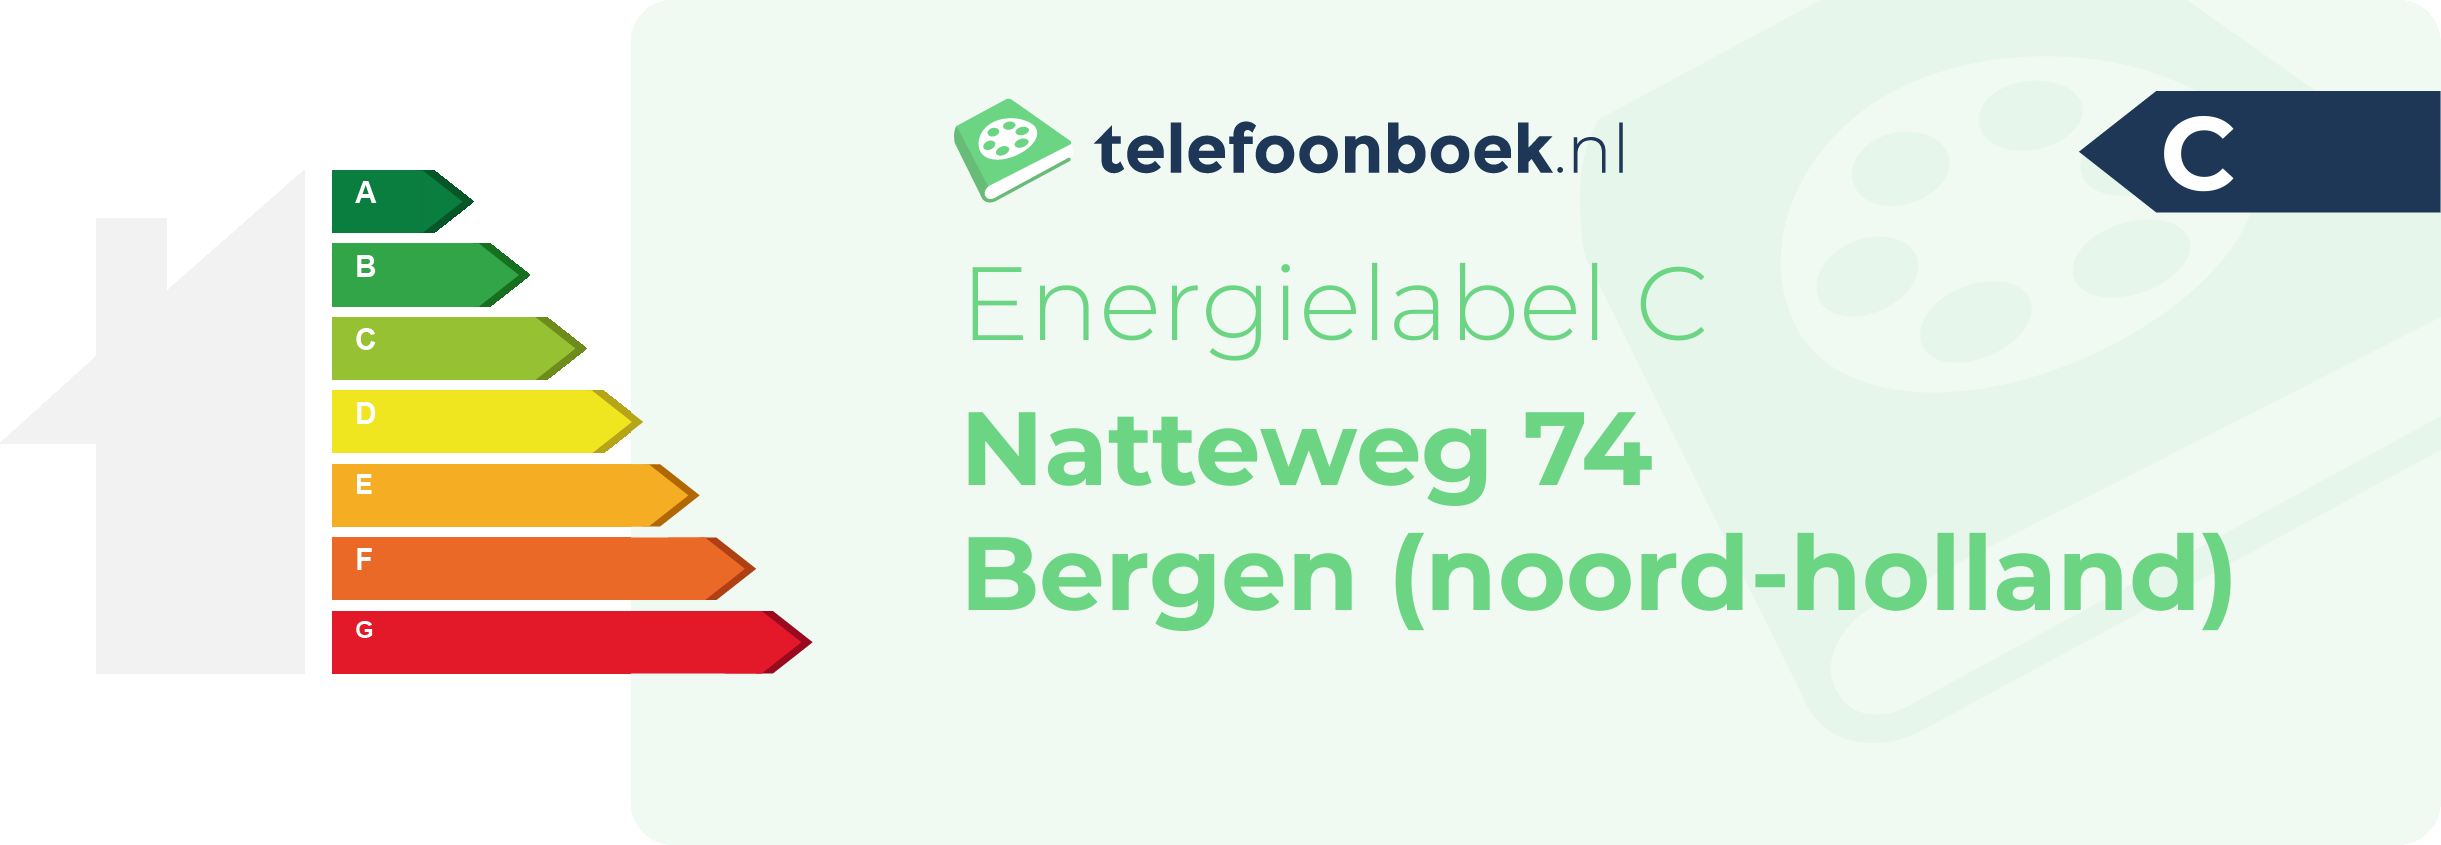 Energielabel Natteweg 74 Bergen (Noord-Holland)